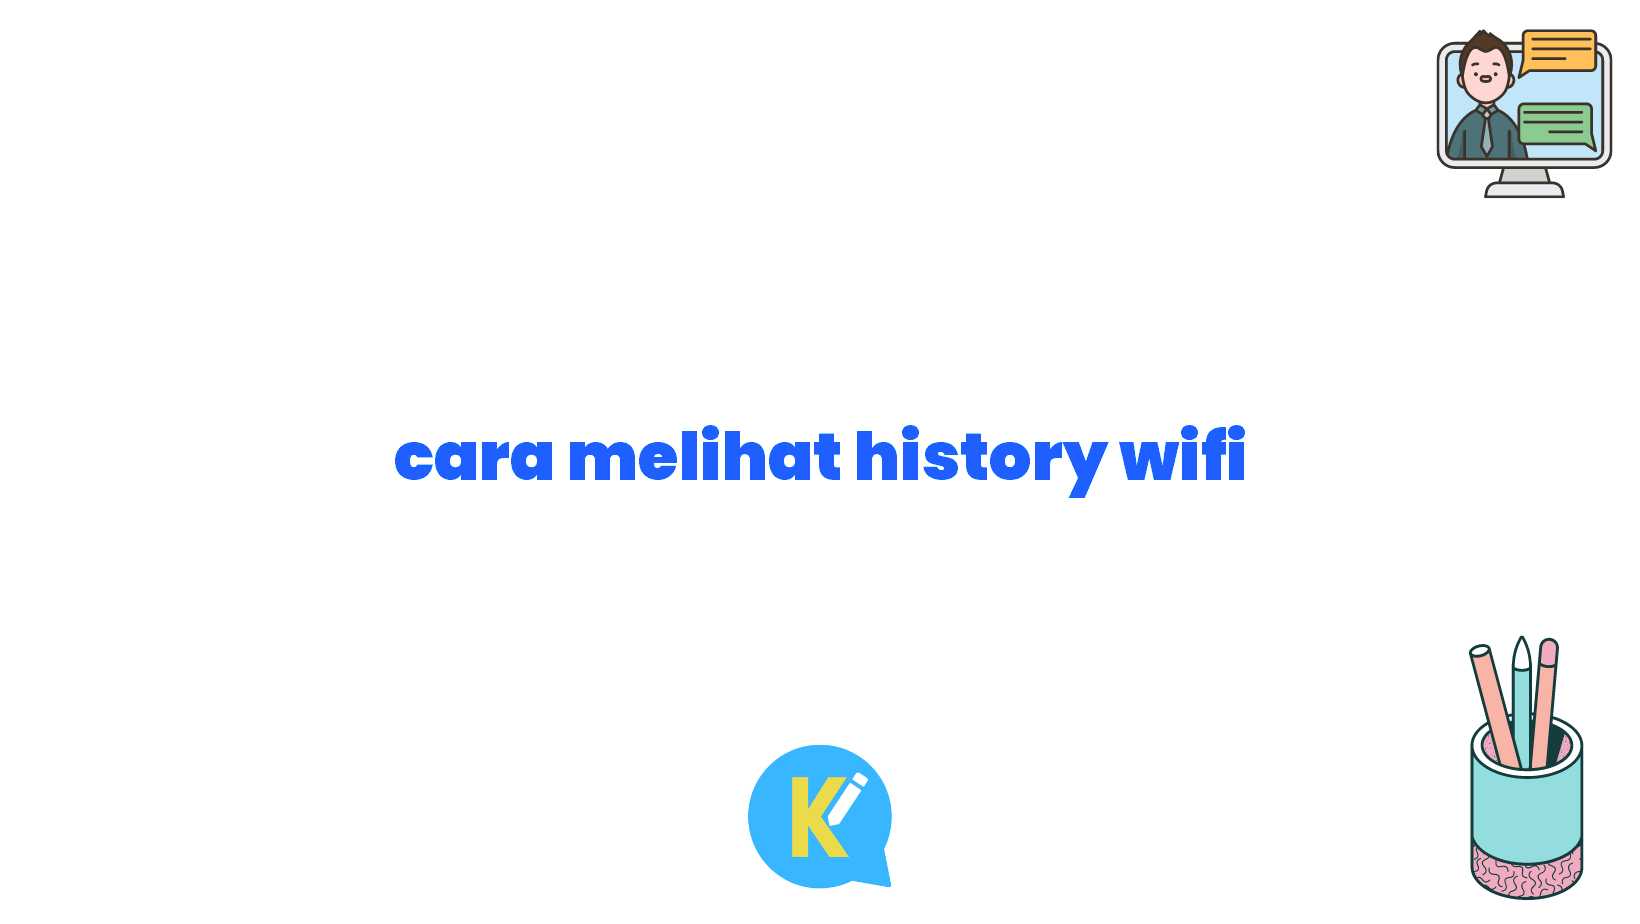 cara melihat history wifi